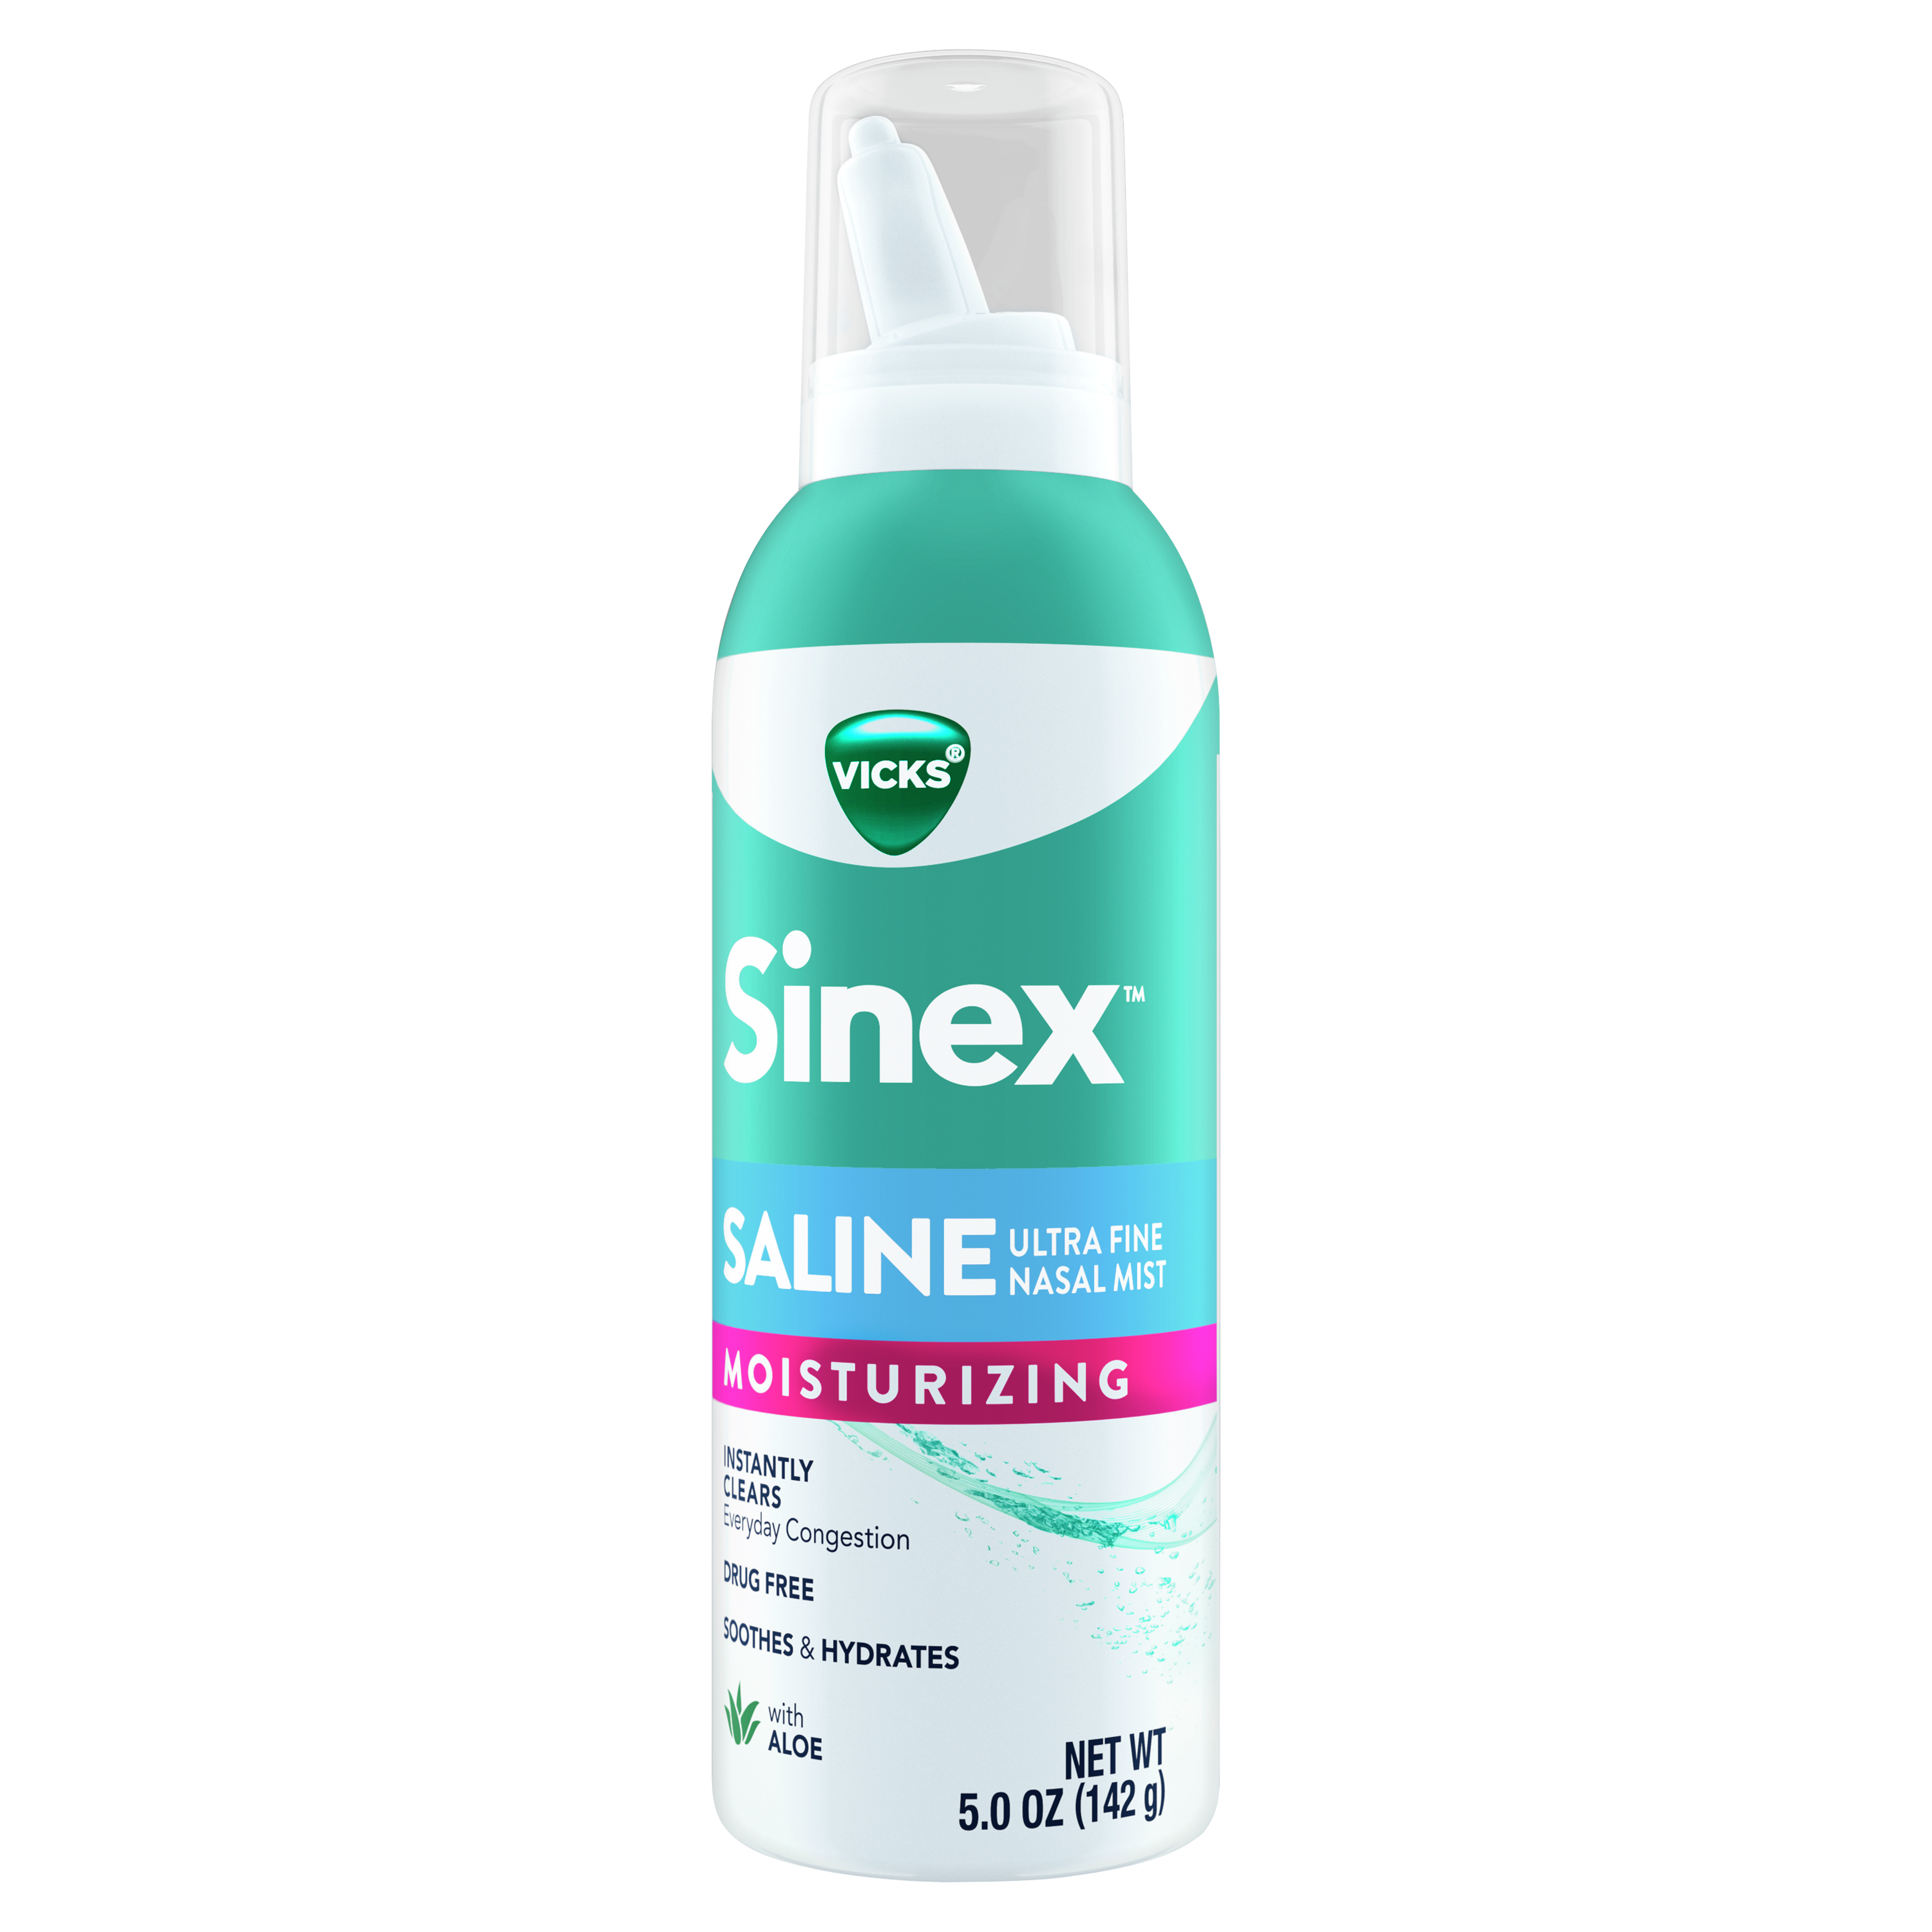 Vicks® Sinex™ Moisturizing Saline Ultra Fine Nasal Mist with Aloe 5oz left